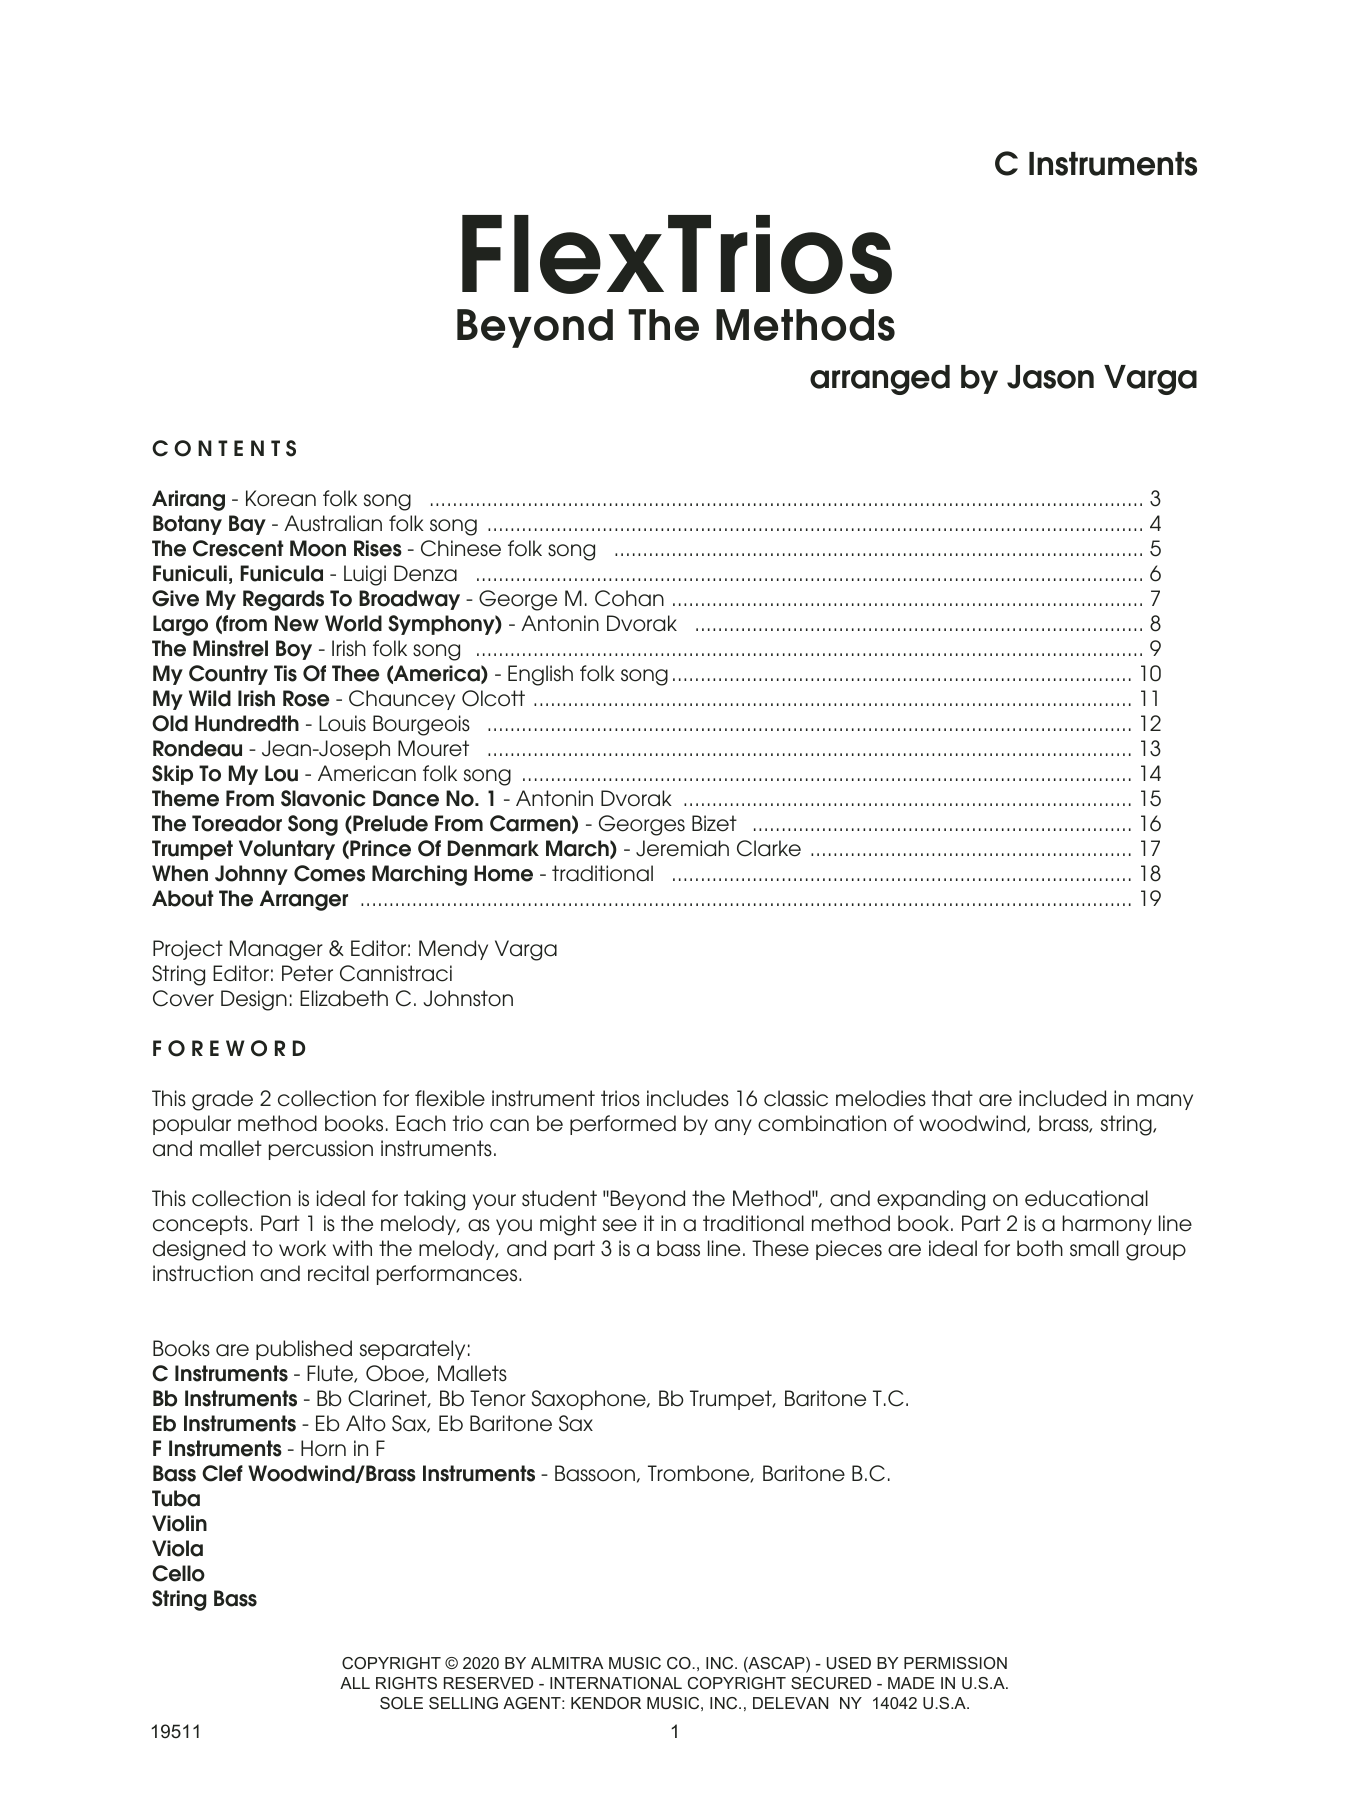 Flextrios - Beyond The Methods (16 Pieces) - C Instruments (Woodwind Ensemble) von Jason Varga